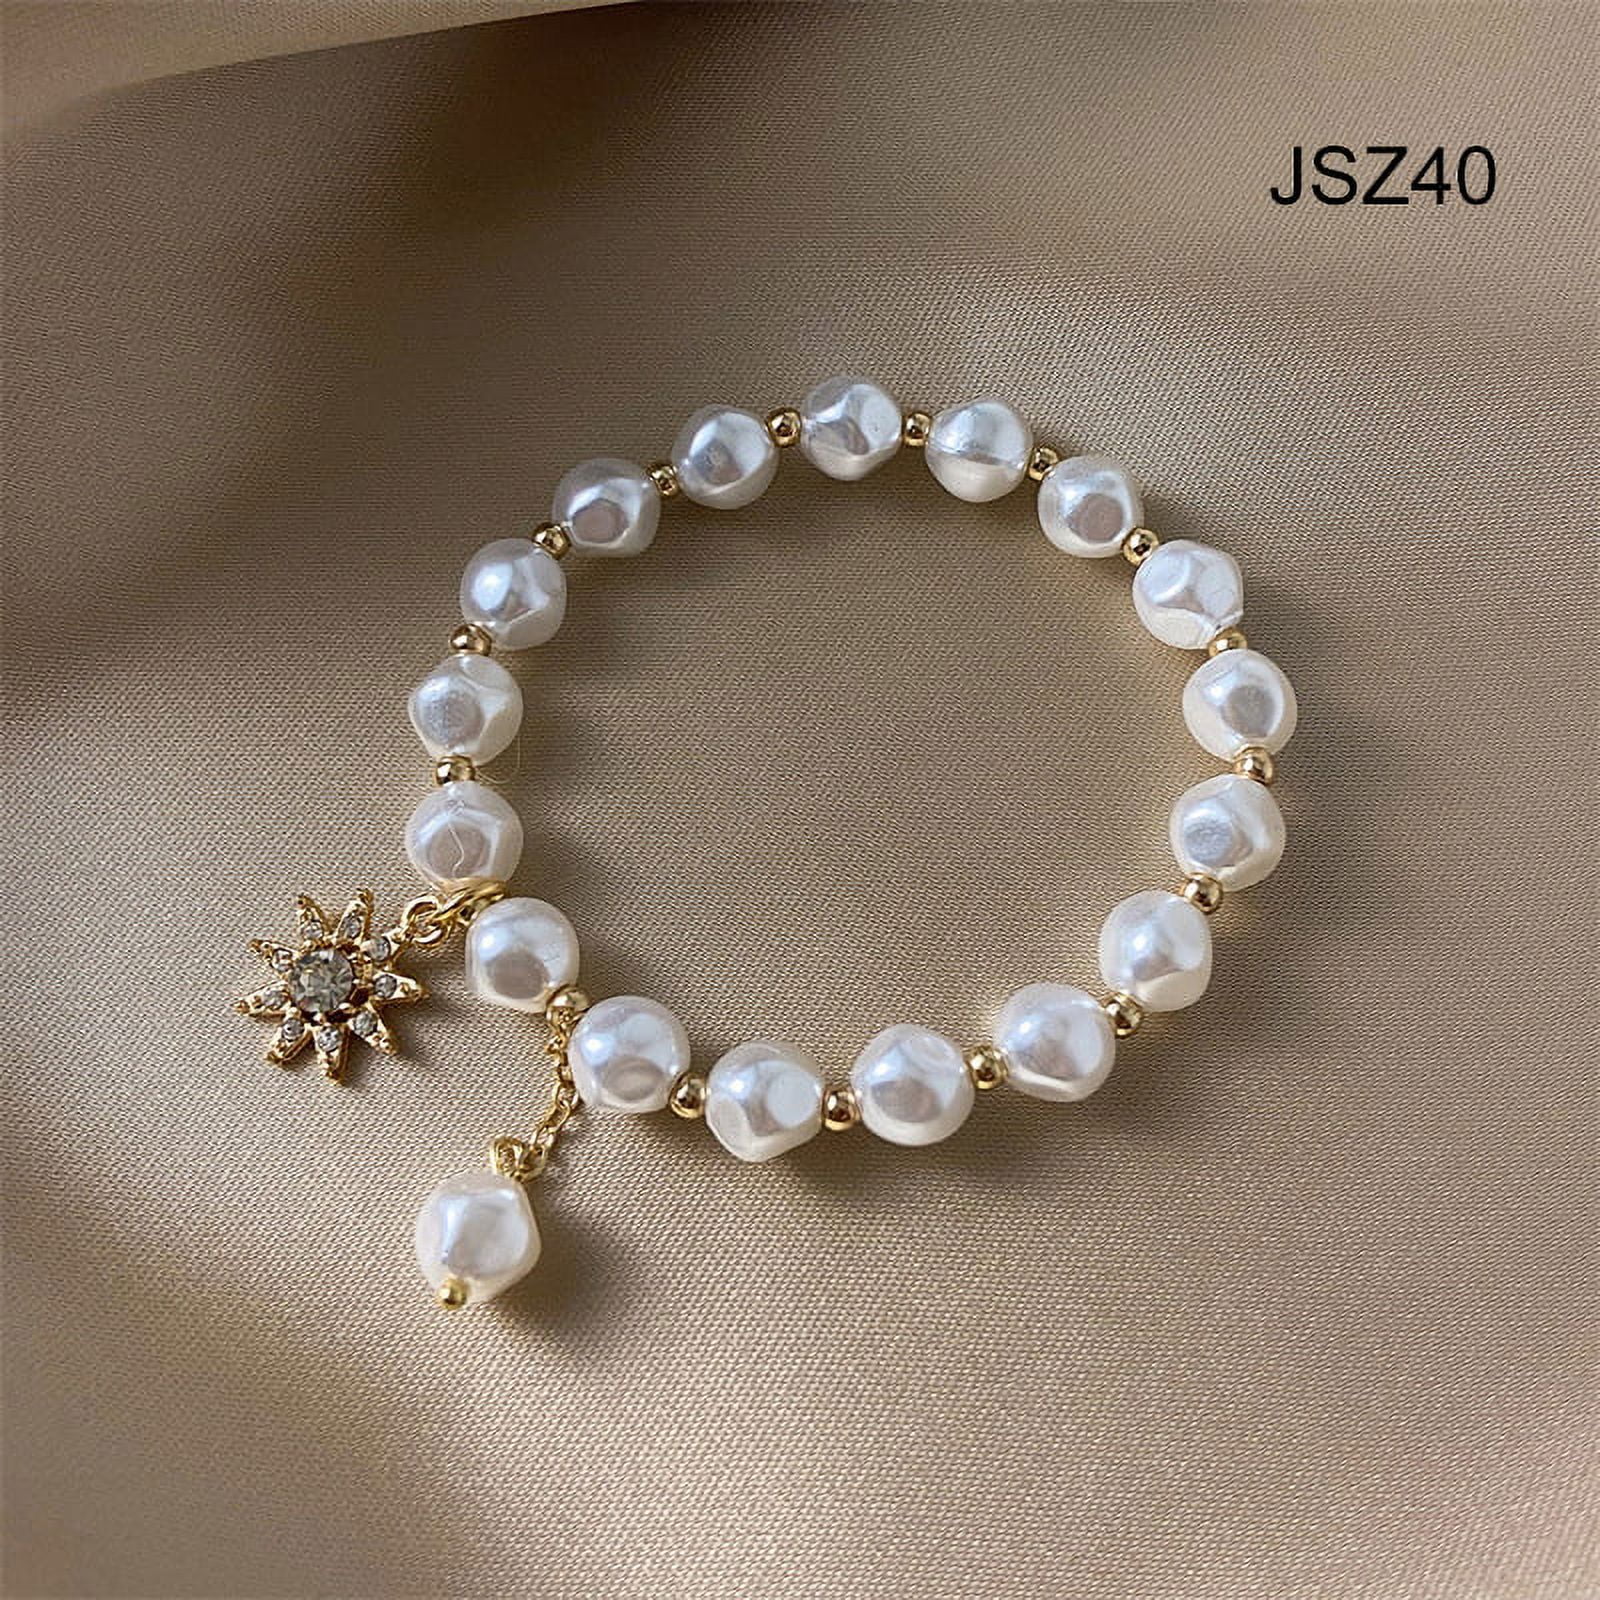 Handmade Double Strand Pearl Bracelet|Silver, Rose Gold, Gold